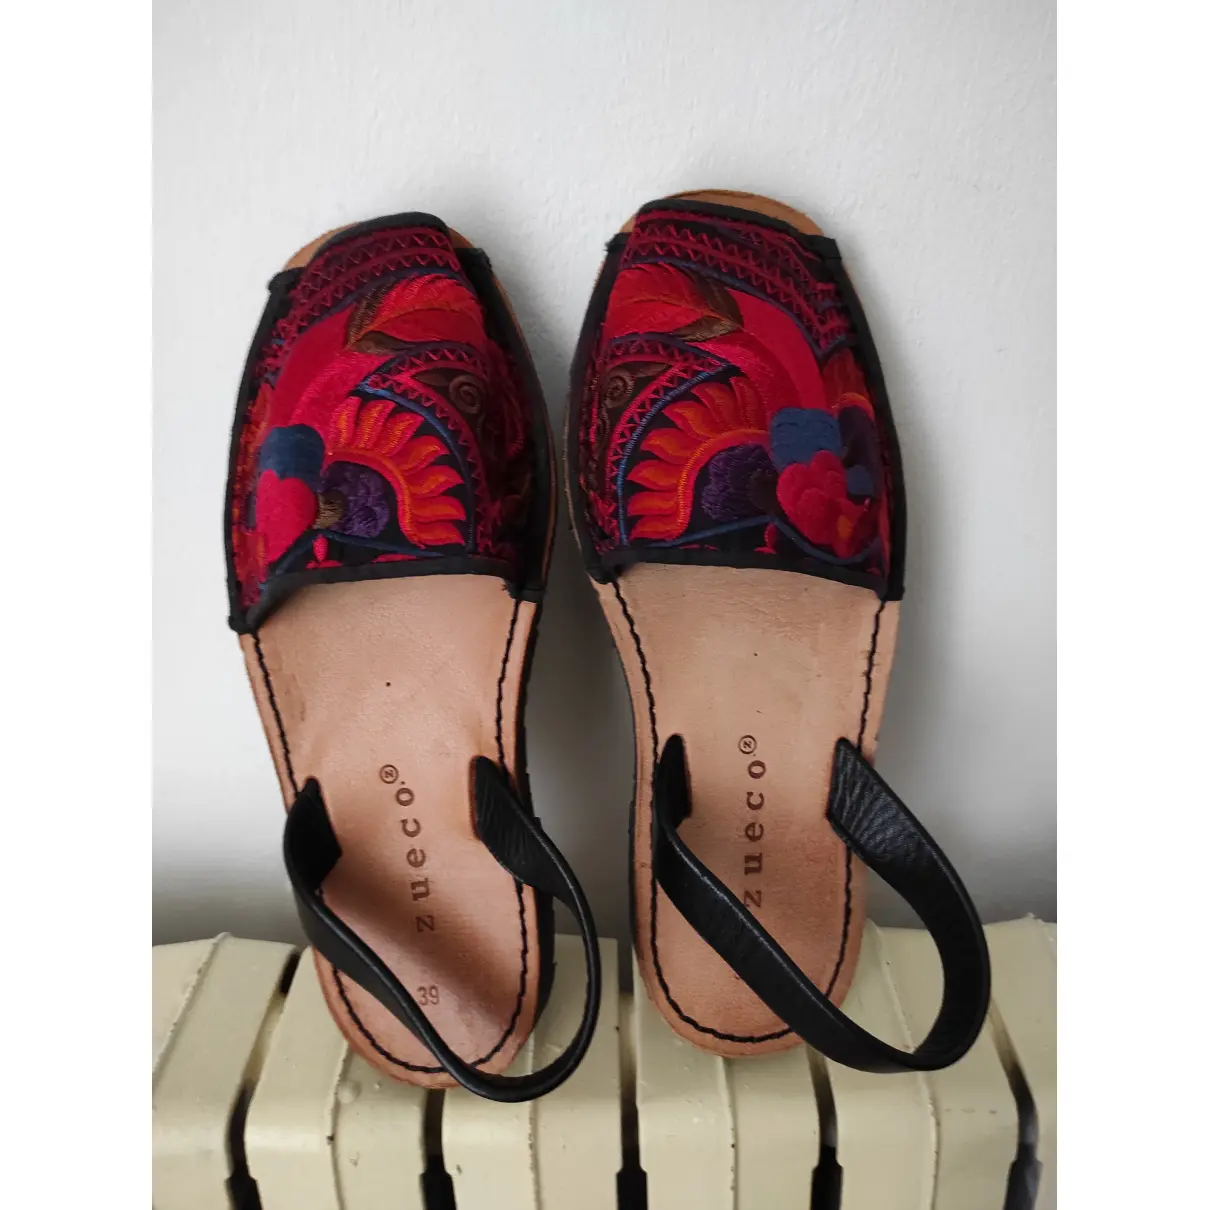 Buy Minorquines Leather sandals online